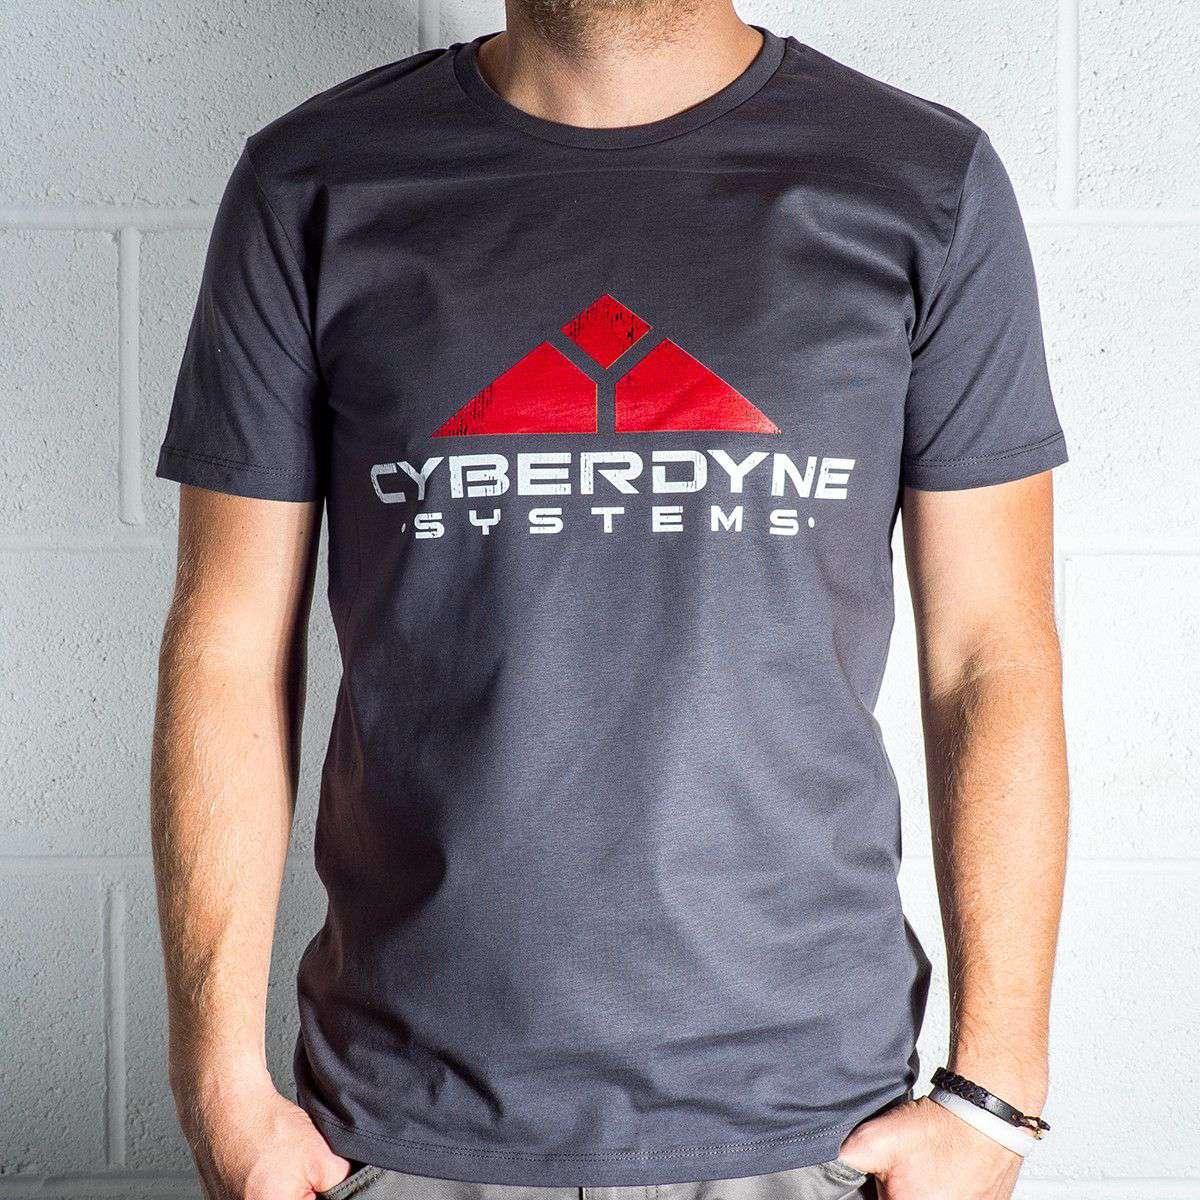 Mens 8Ball Black Tag Premium Cyberdyne Systems Graphic T-Shirt For Men 8Ball